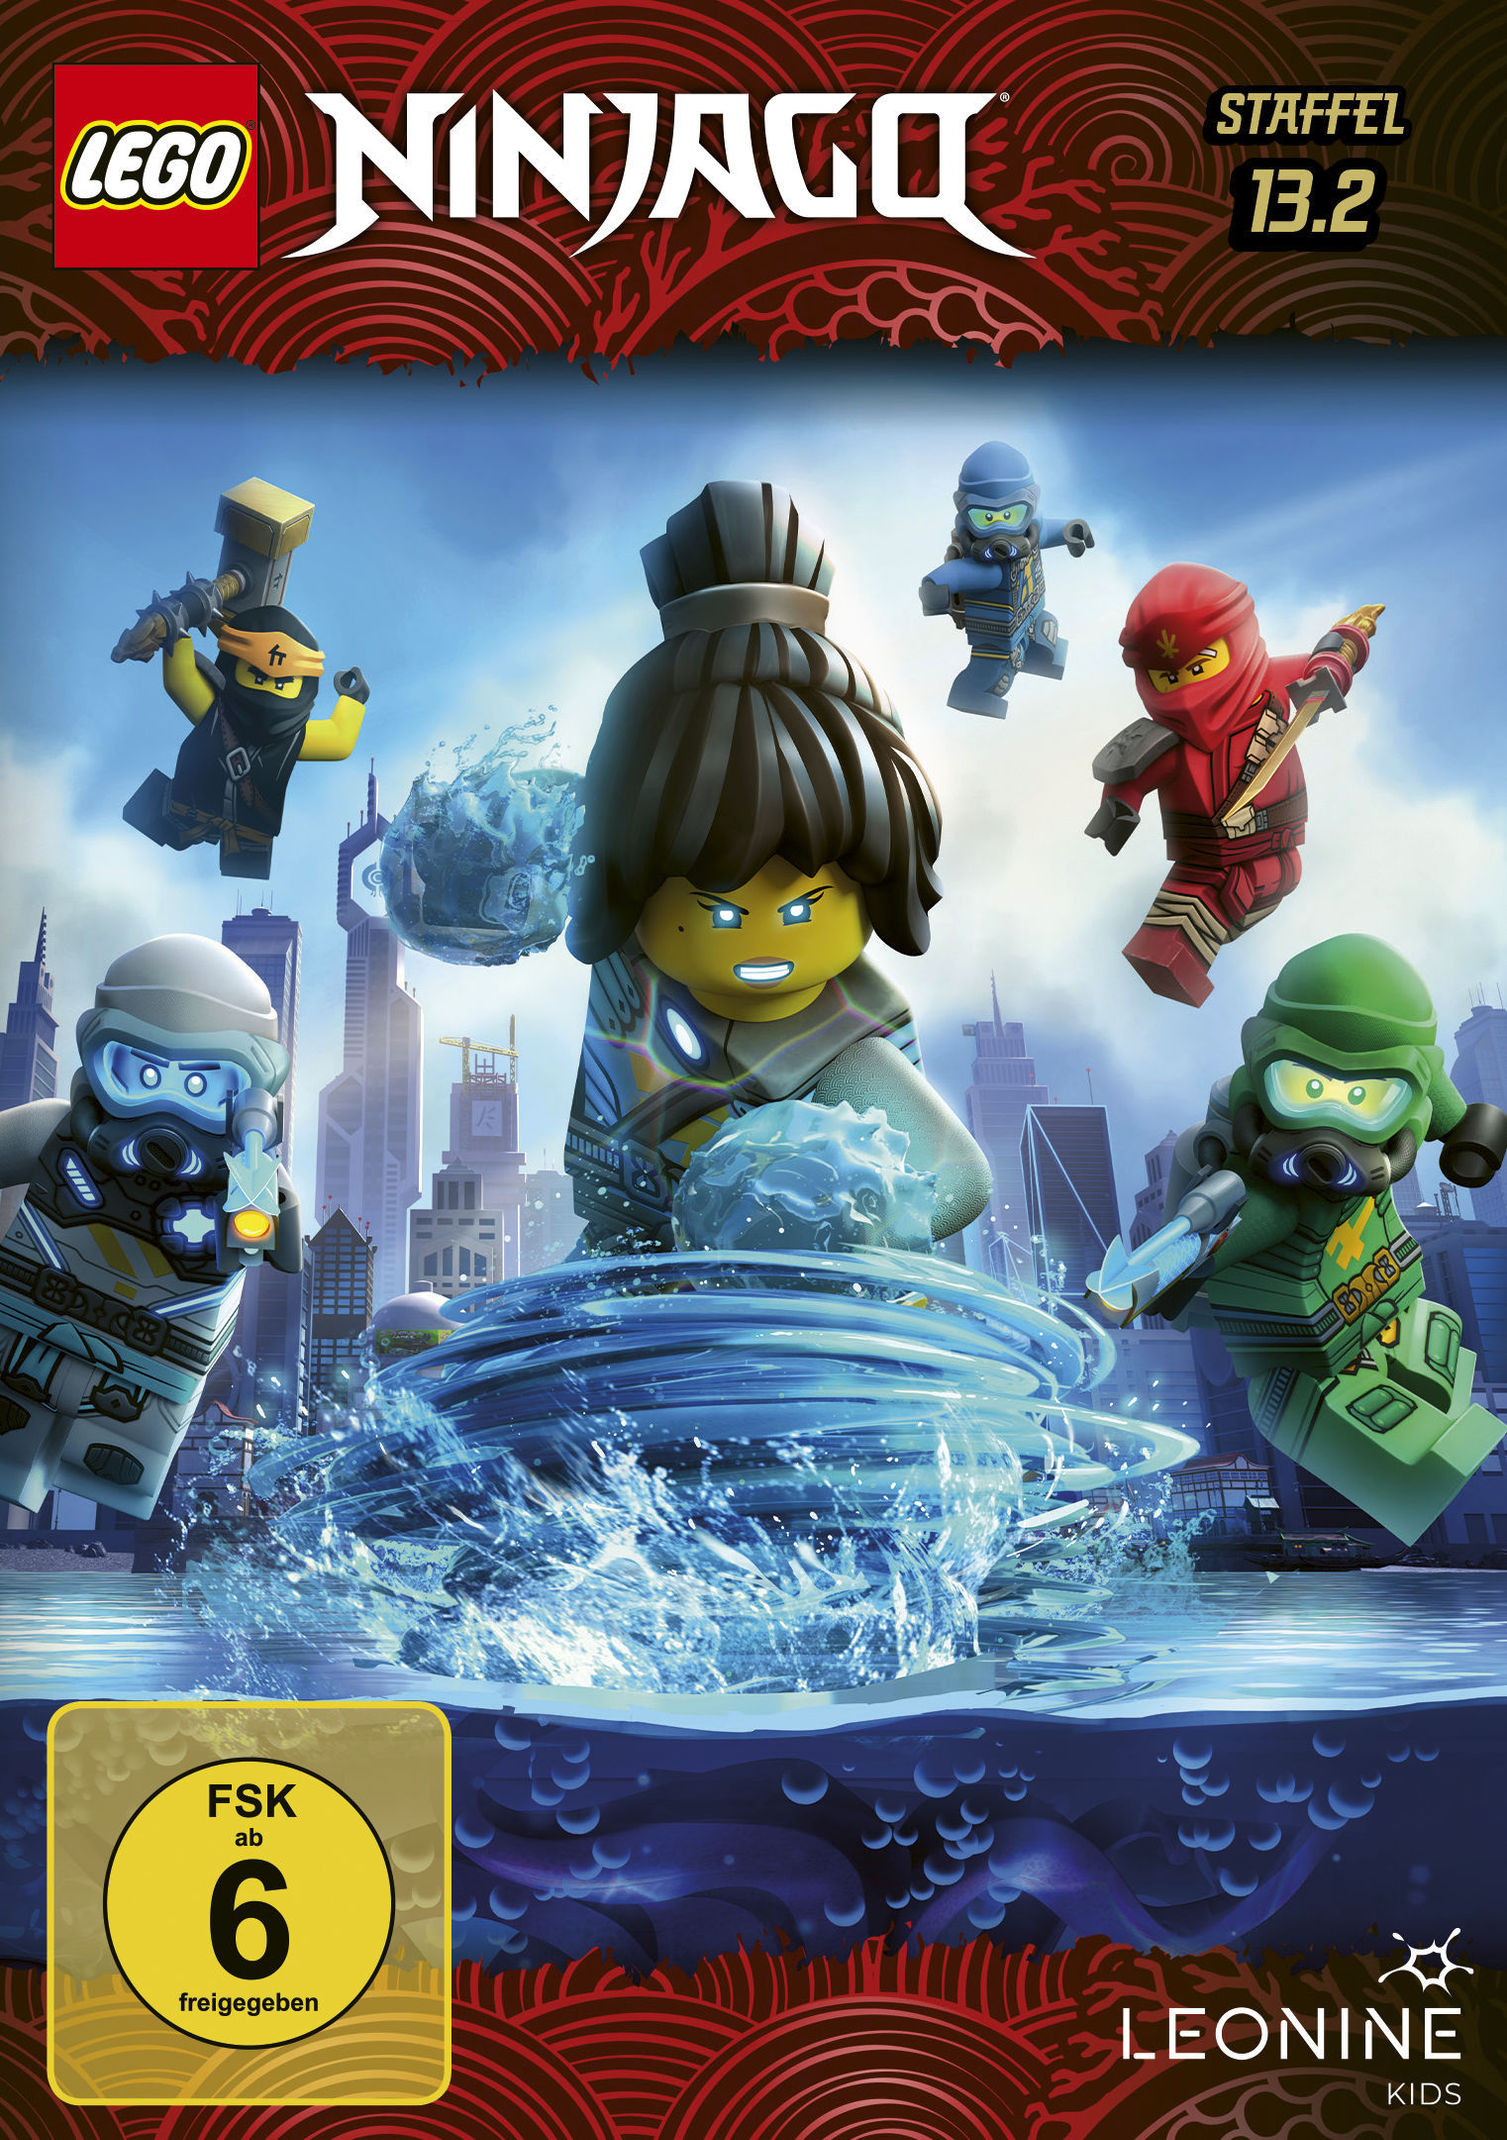 Lego Ninjago - Staffel 13.2 kaufen | tausendkind.at